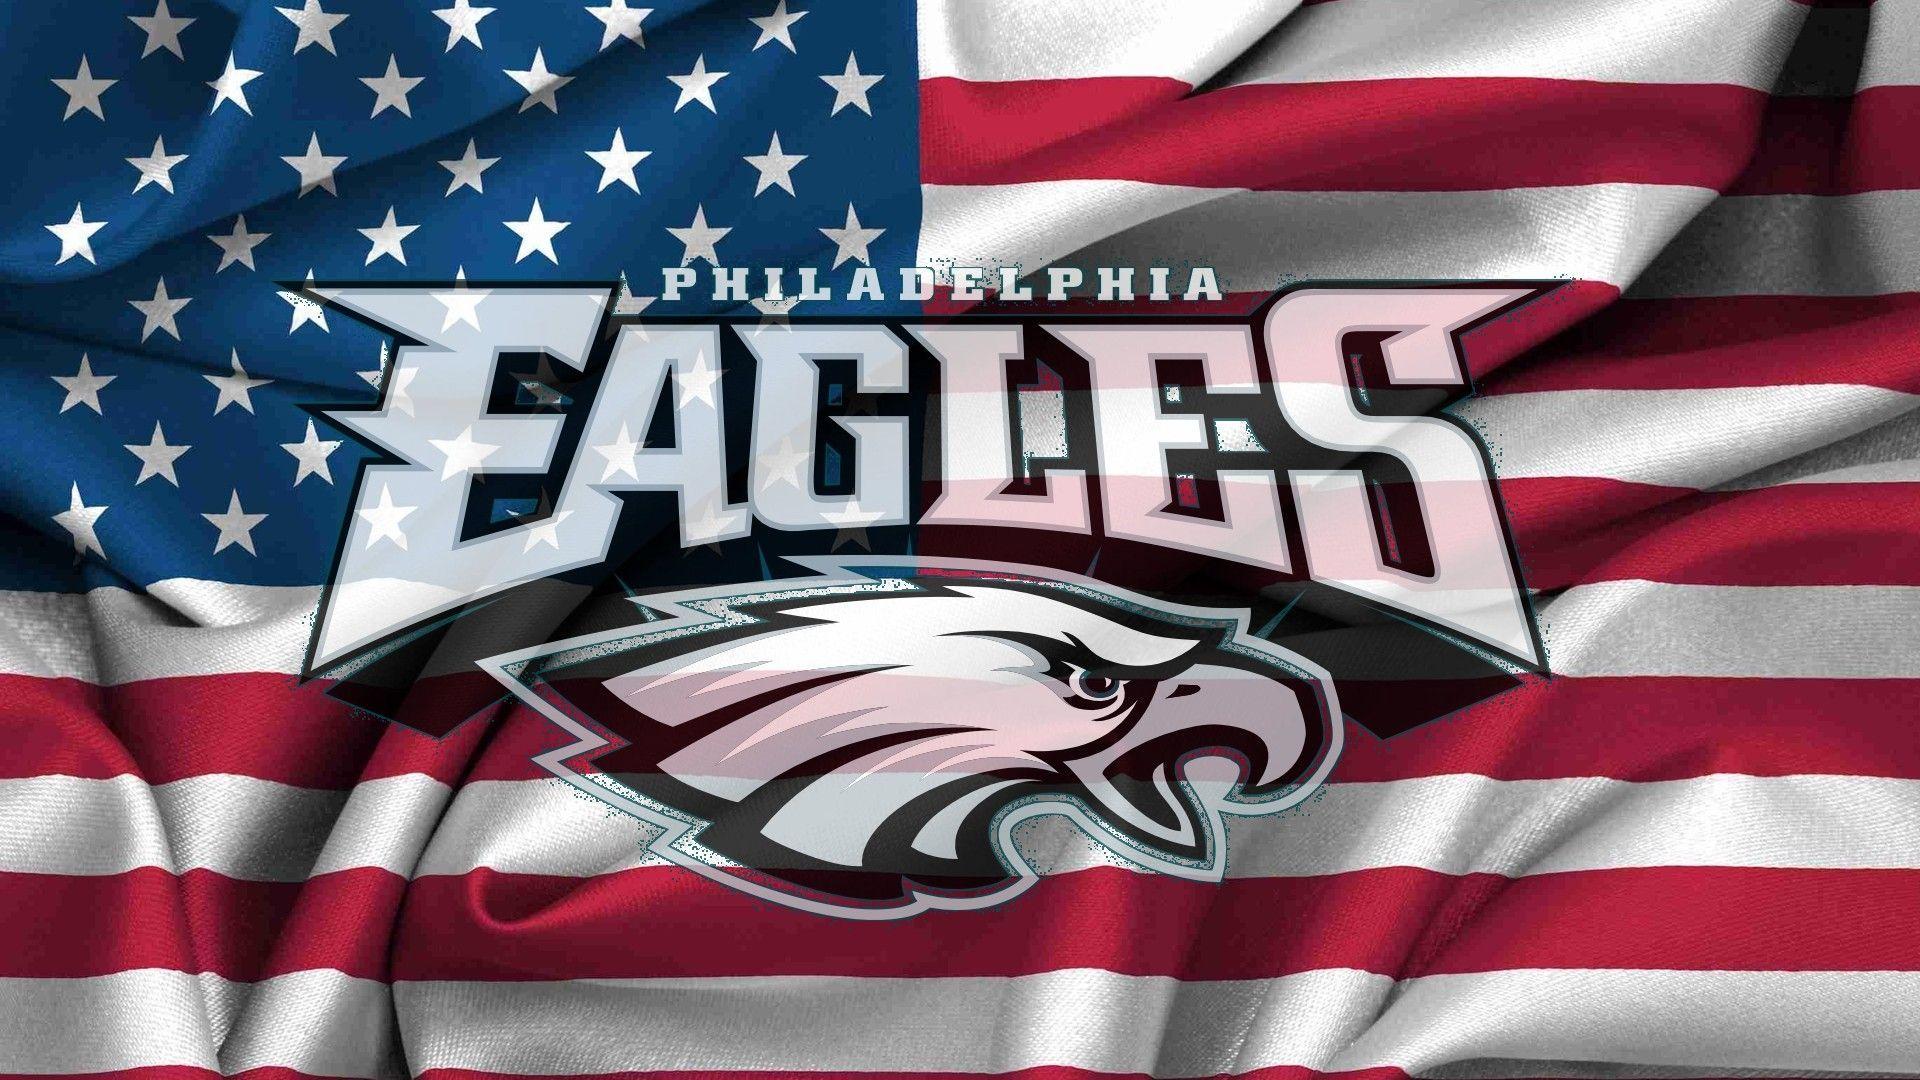 Philadelphia Eagles 2016 Schedule Wallpapers - Wallpaper Cave